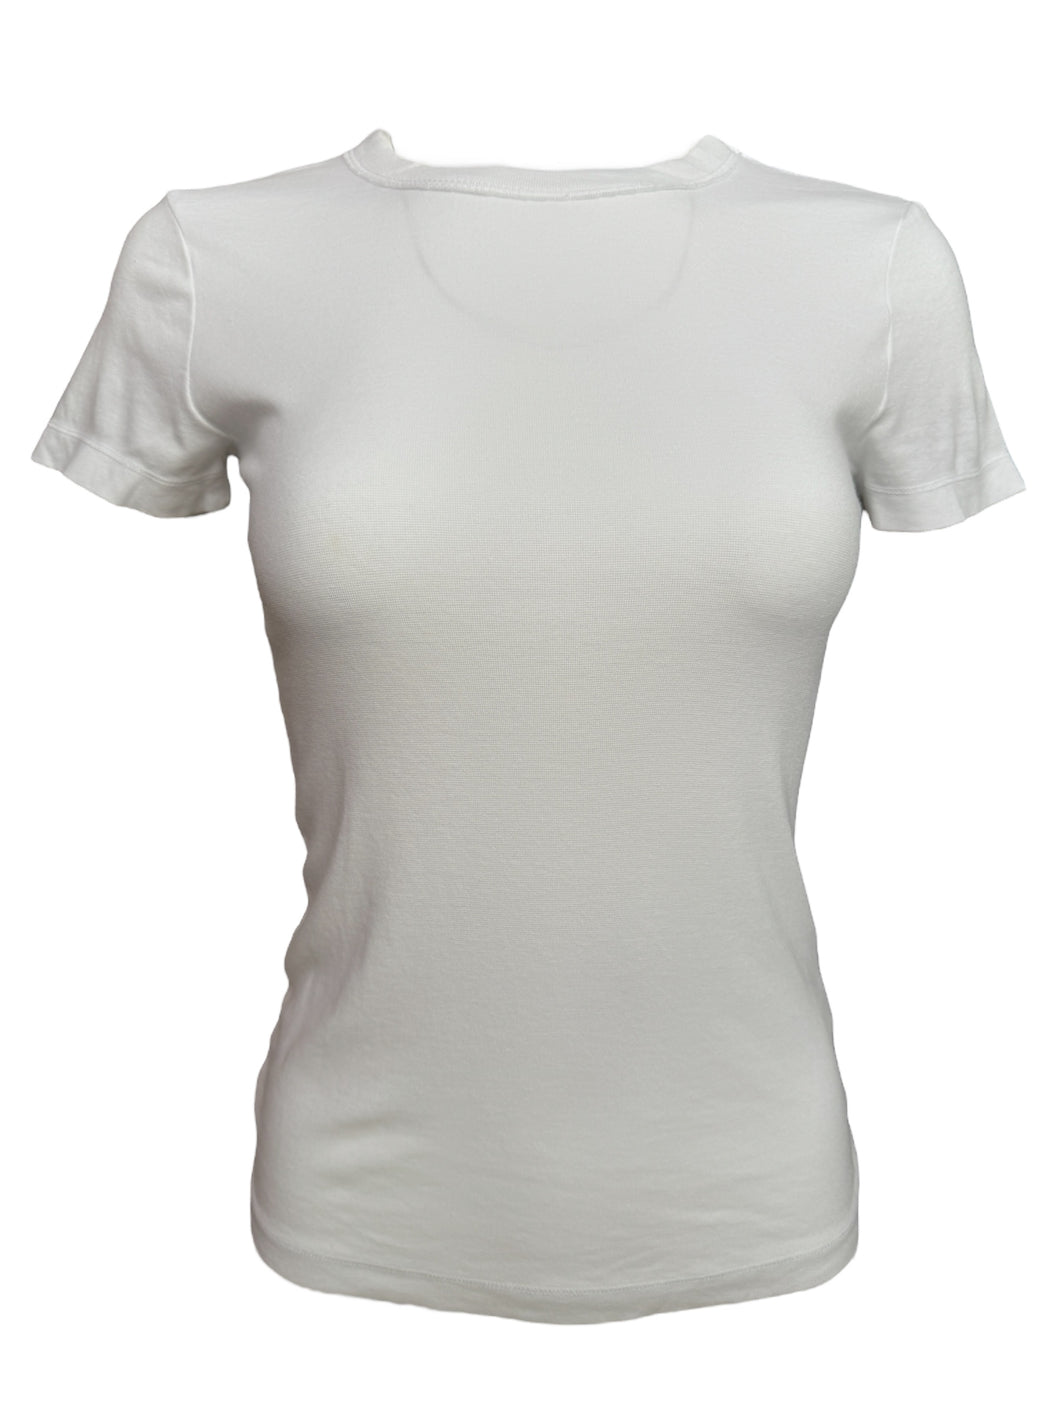 Crown Jewel Crewneck T-Shirt White